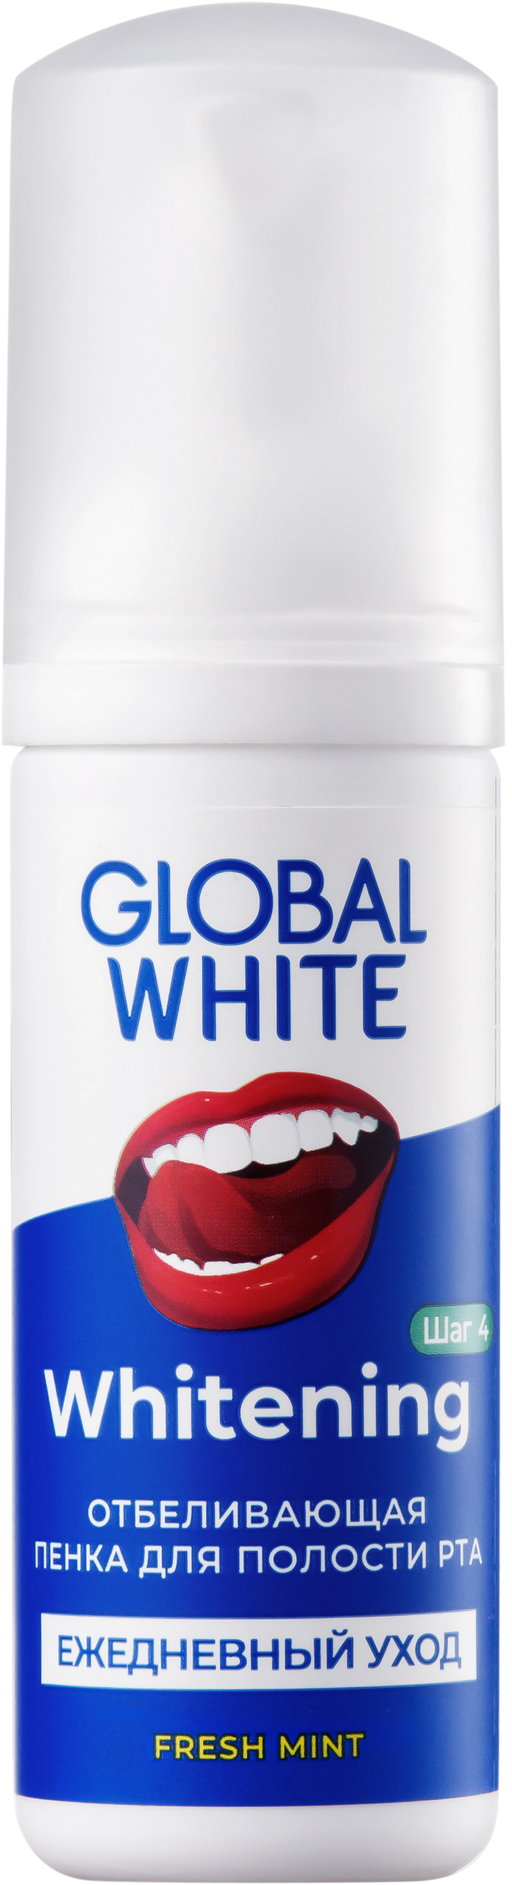 Global White пенка для полости рта отбеливающая, пенка, 50 мл, 1 шт.